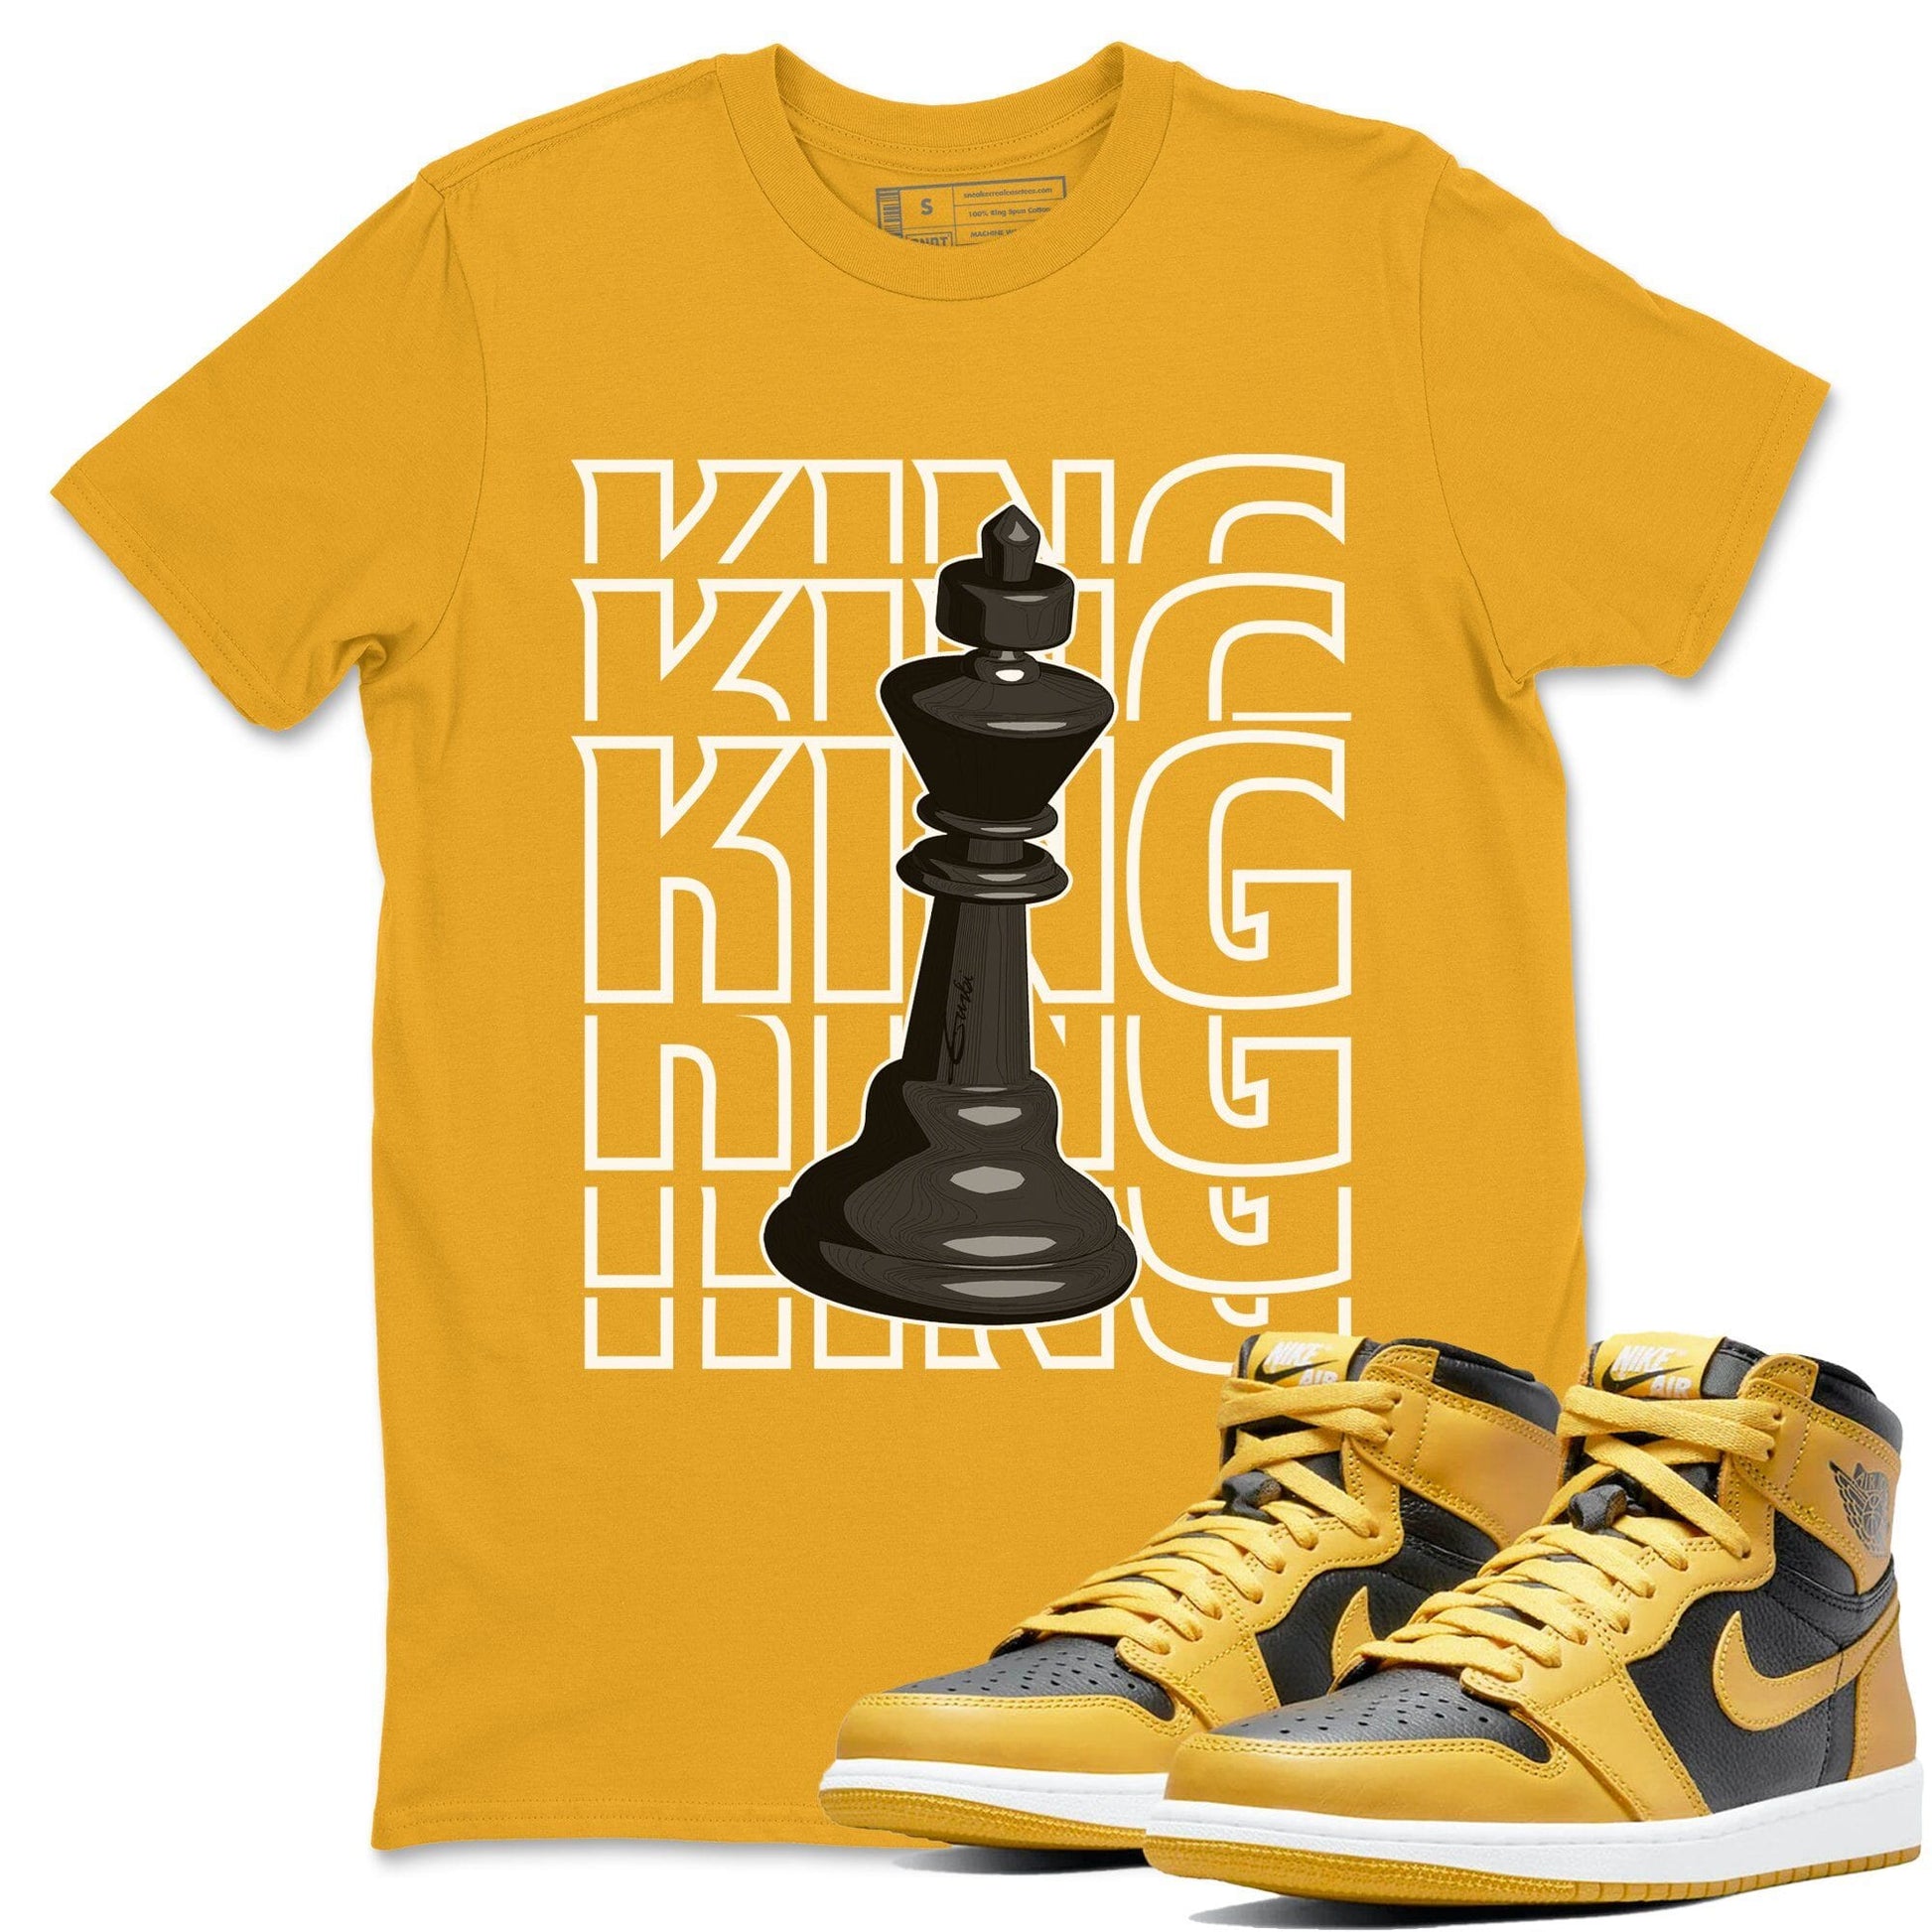 Jordan 1 Pollen Sneaker Match Tees King Sneaker Tees Jordan 1 Pollen Sneaker Release Tees Unisex Shirts